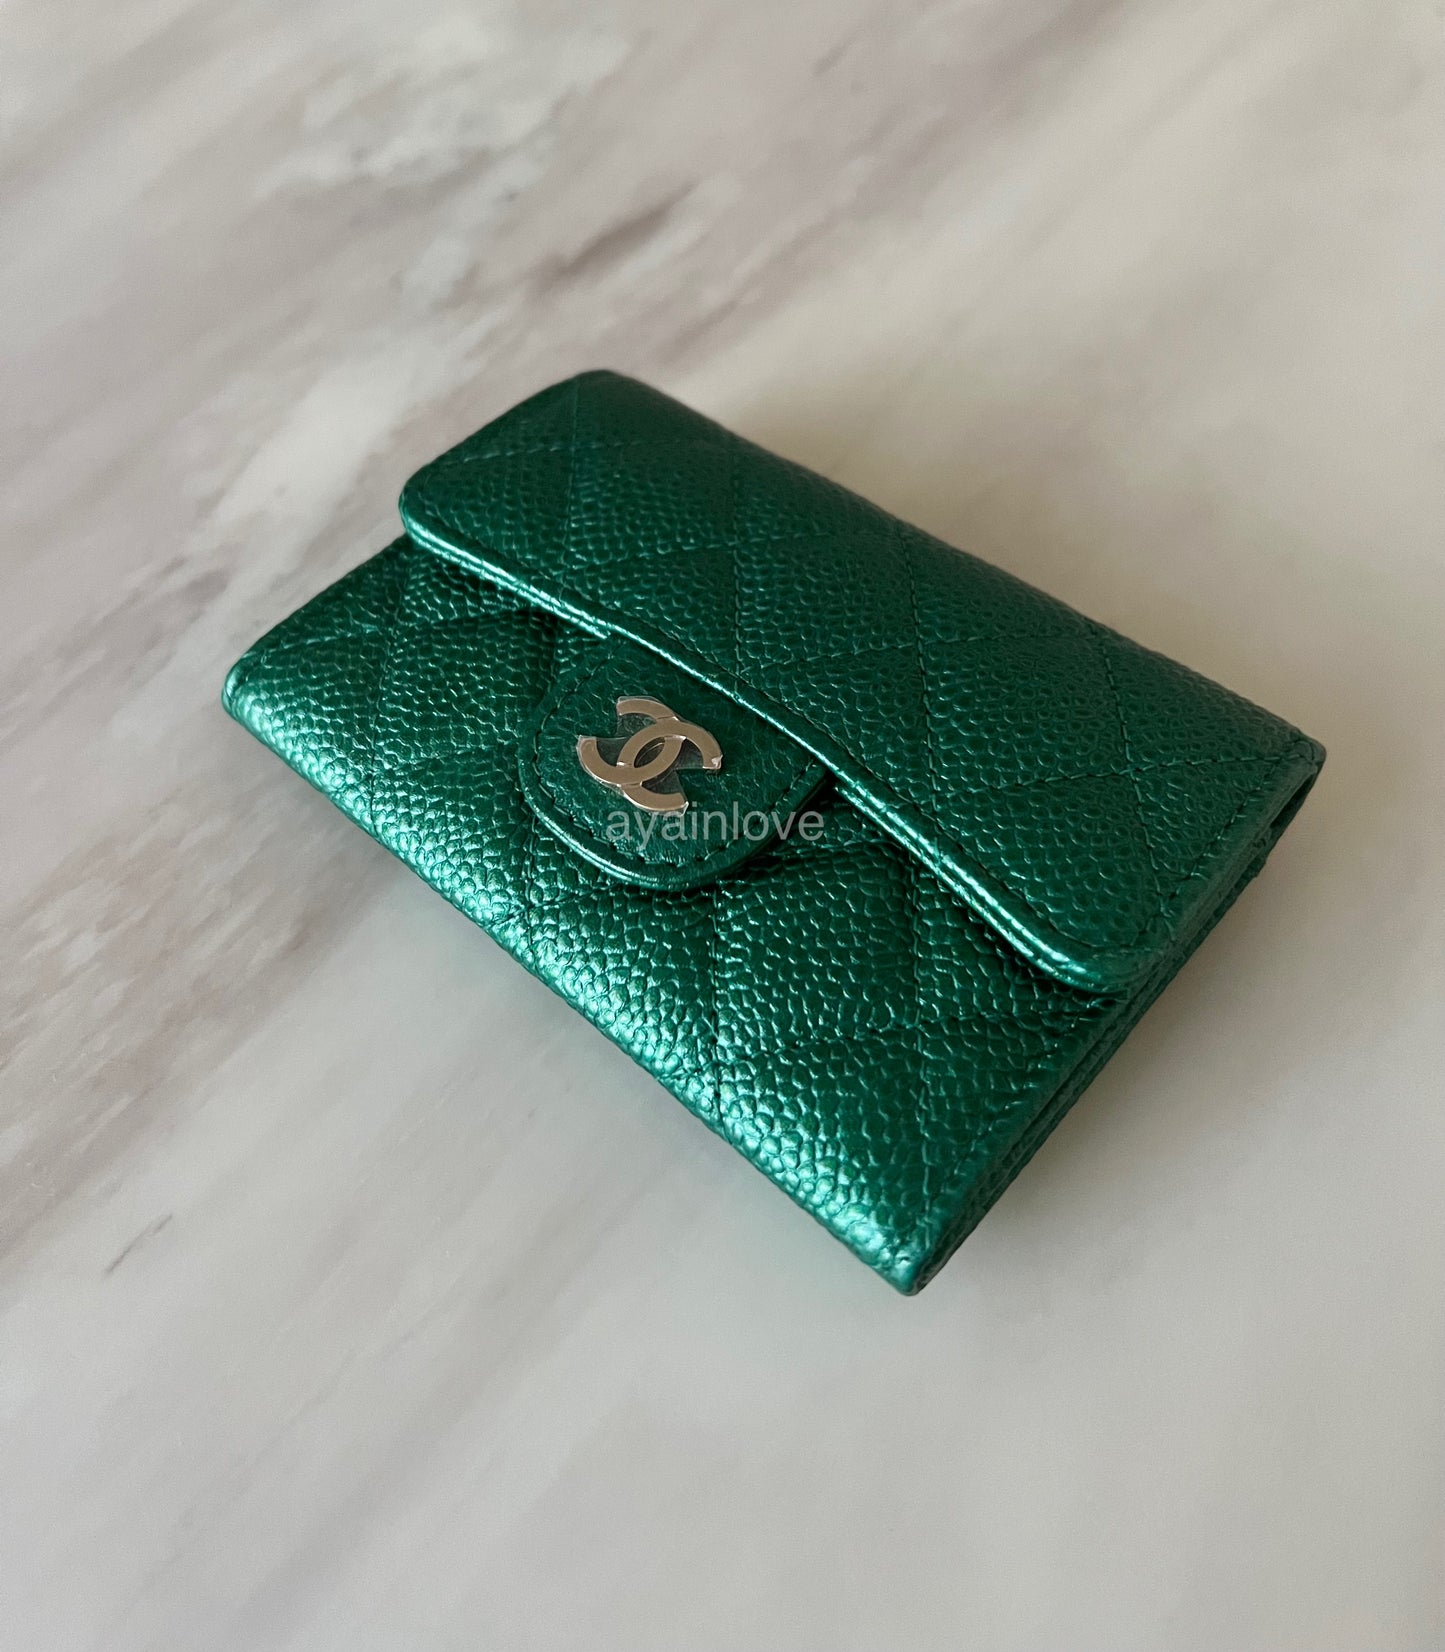 CHANEL 18S Iridescent Green Caviar Small Snap Card Holder Light Gold Hardware